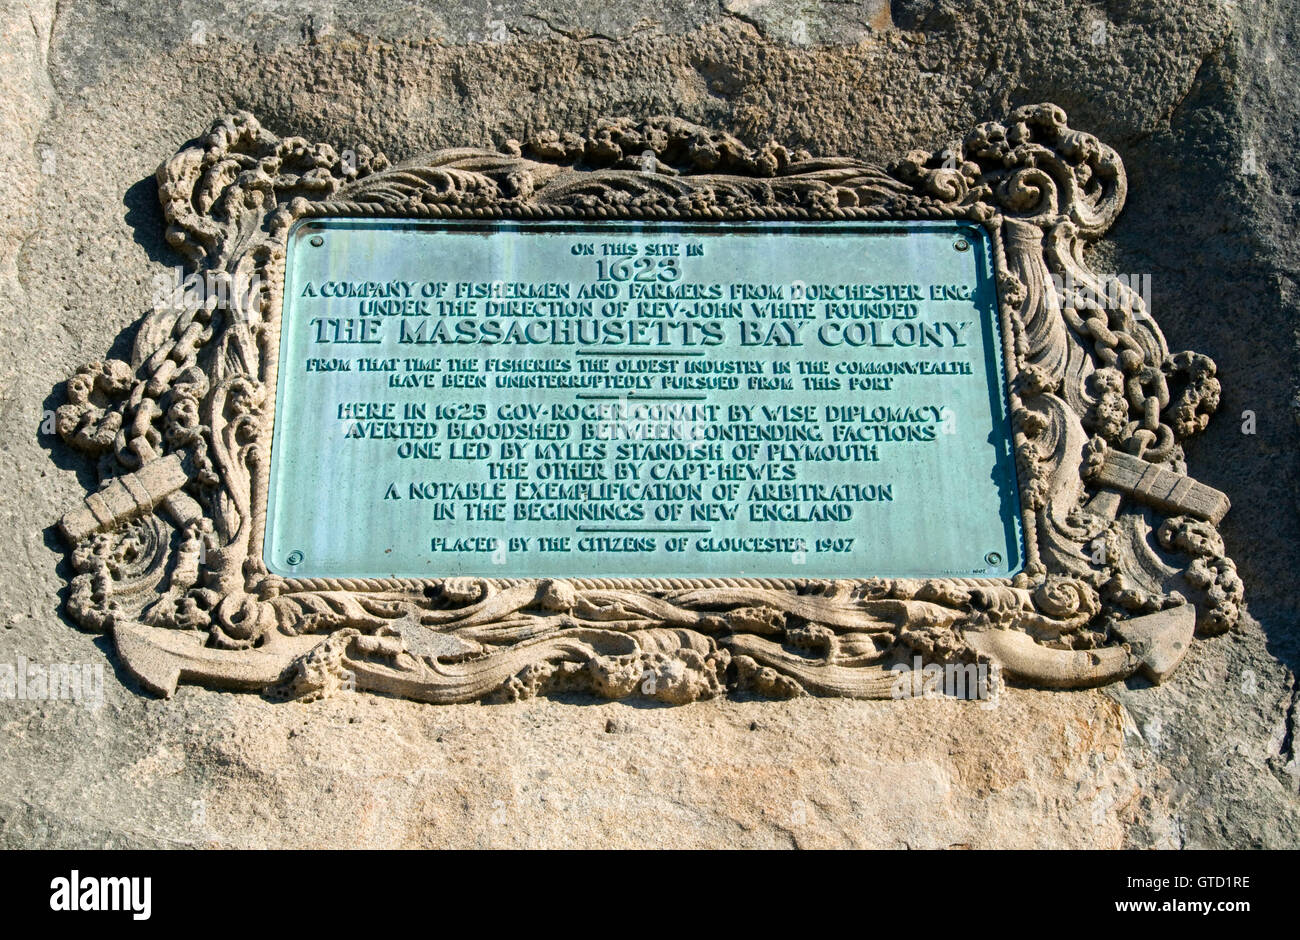 Massachusetts Bay Colony plaque on Tablet Rock, Stage Fort Park, Gloucester, Massachusetts Stock Photo